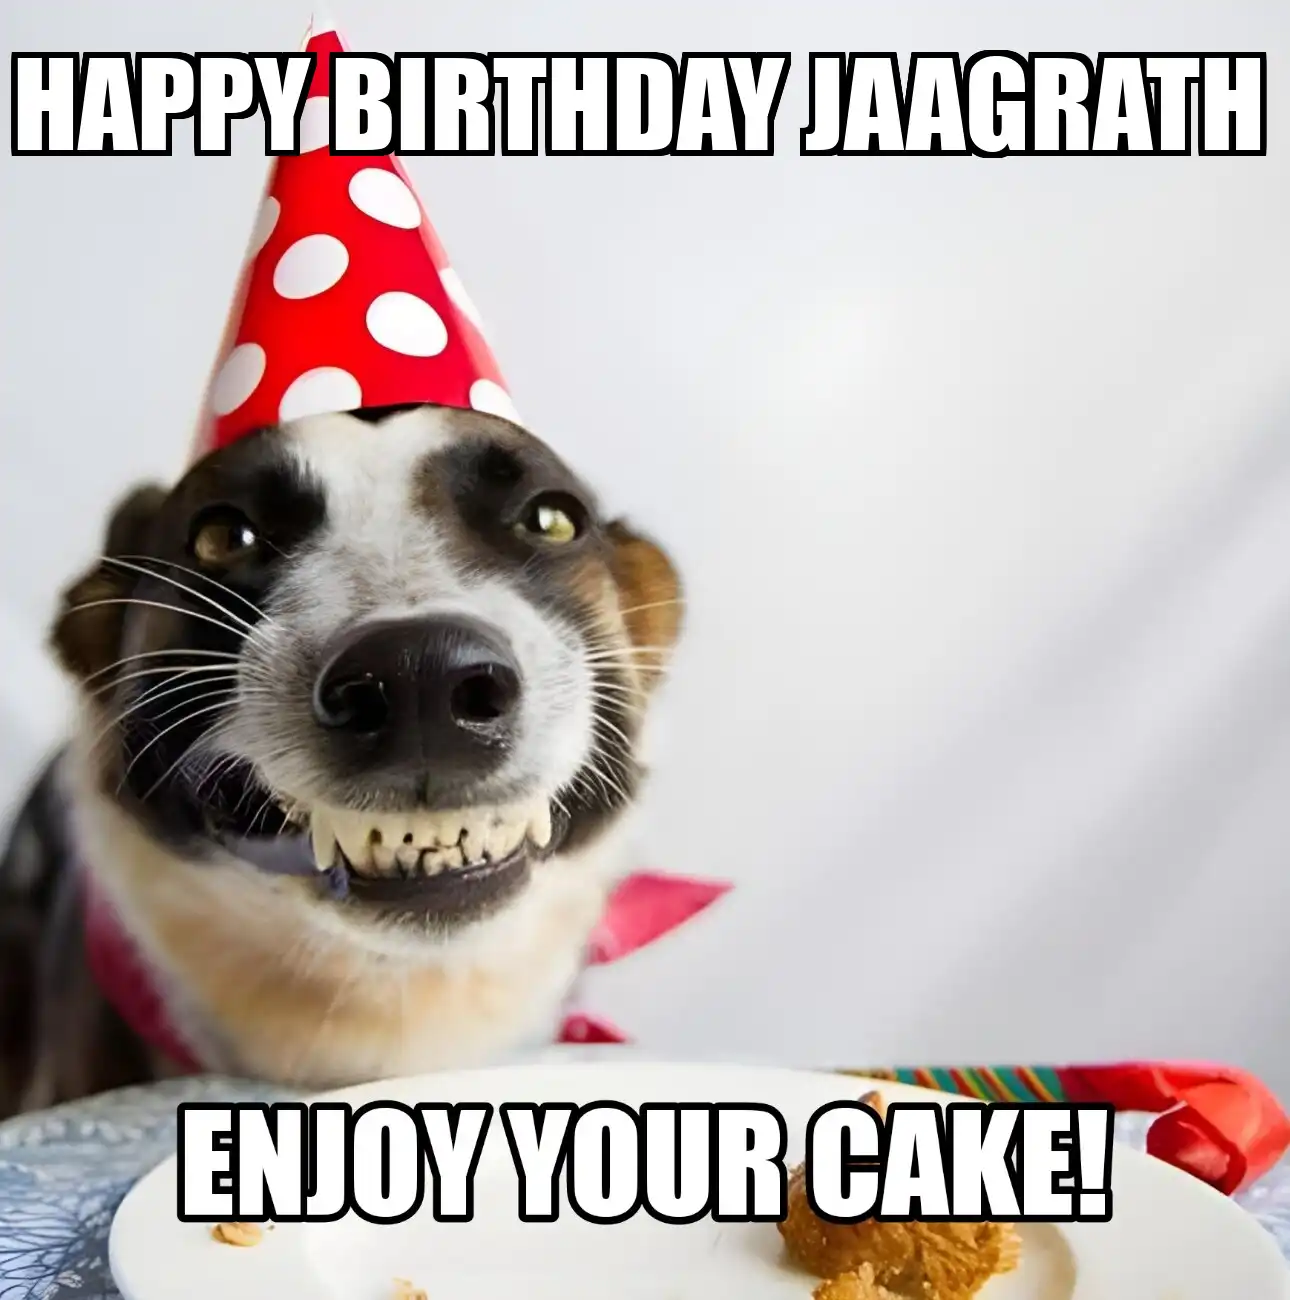 Happy Birthday Jaagrath Enjoy Your Cake Dog Meme